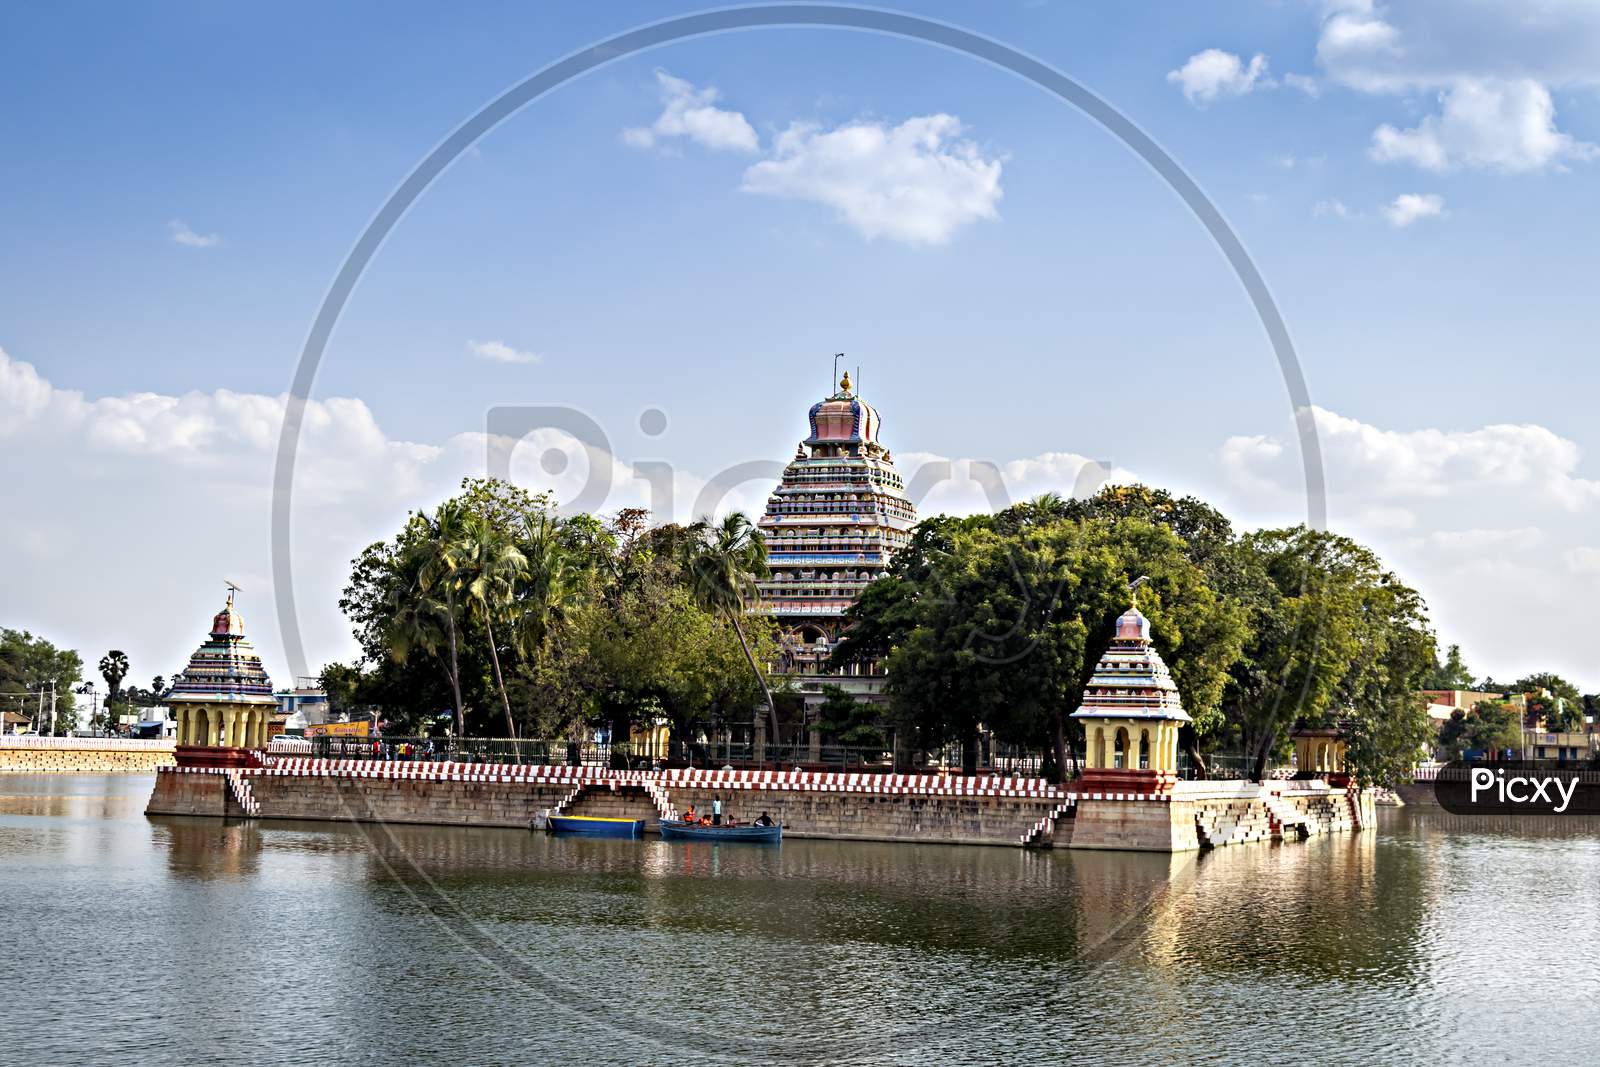 Vandiyur Mariamman temple located inside a lake in Madurai, India.